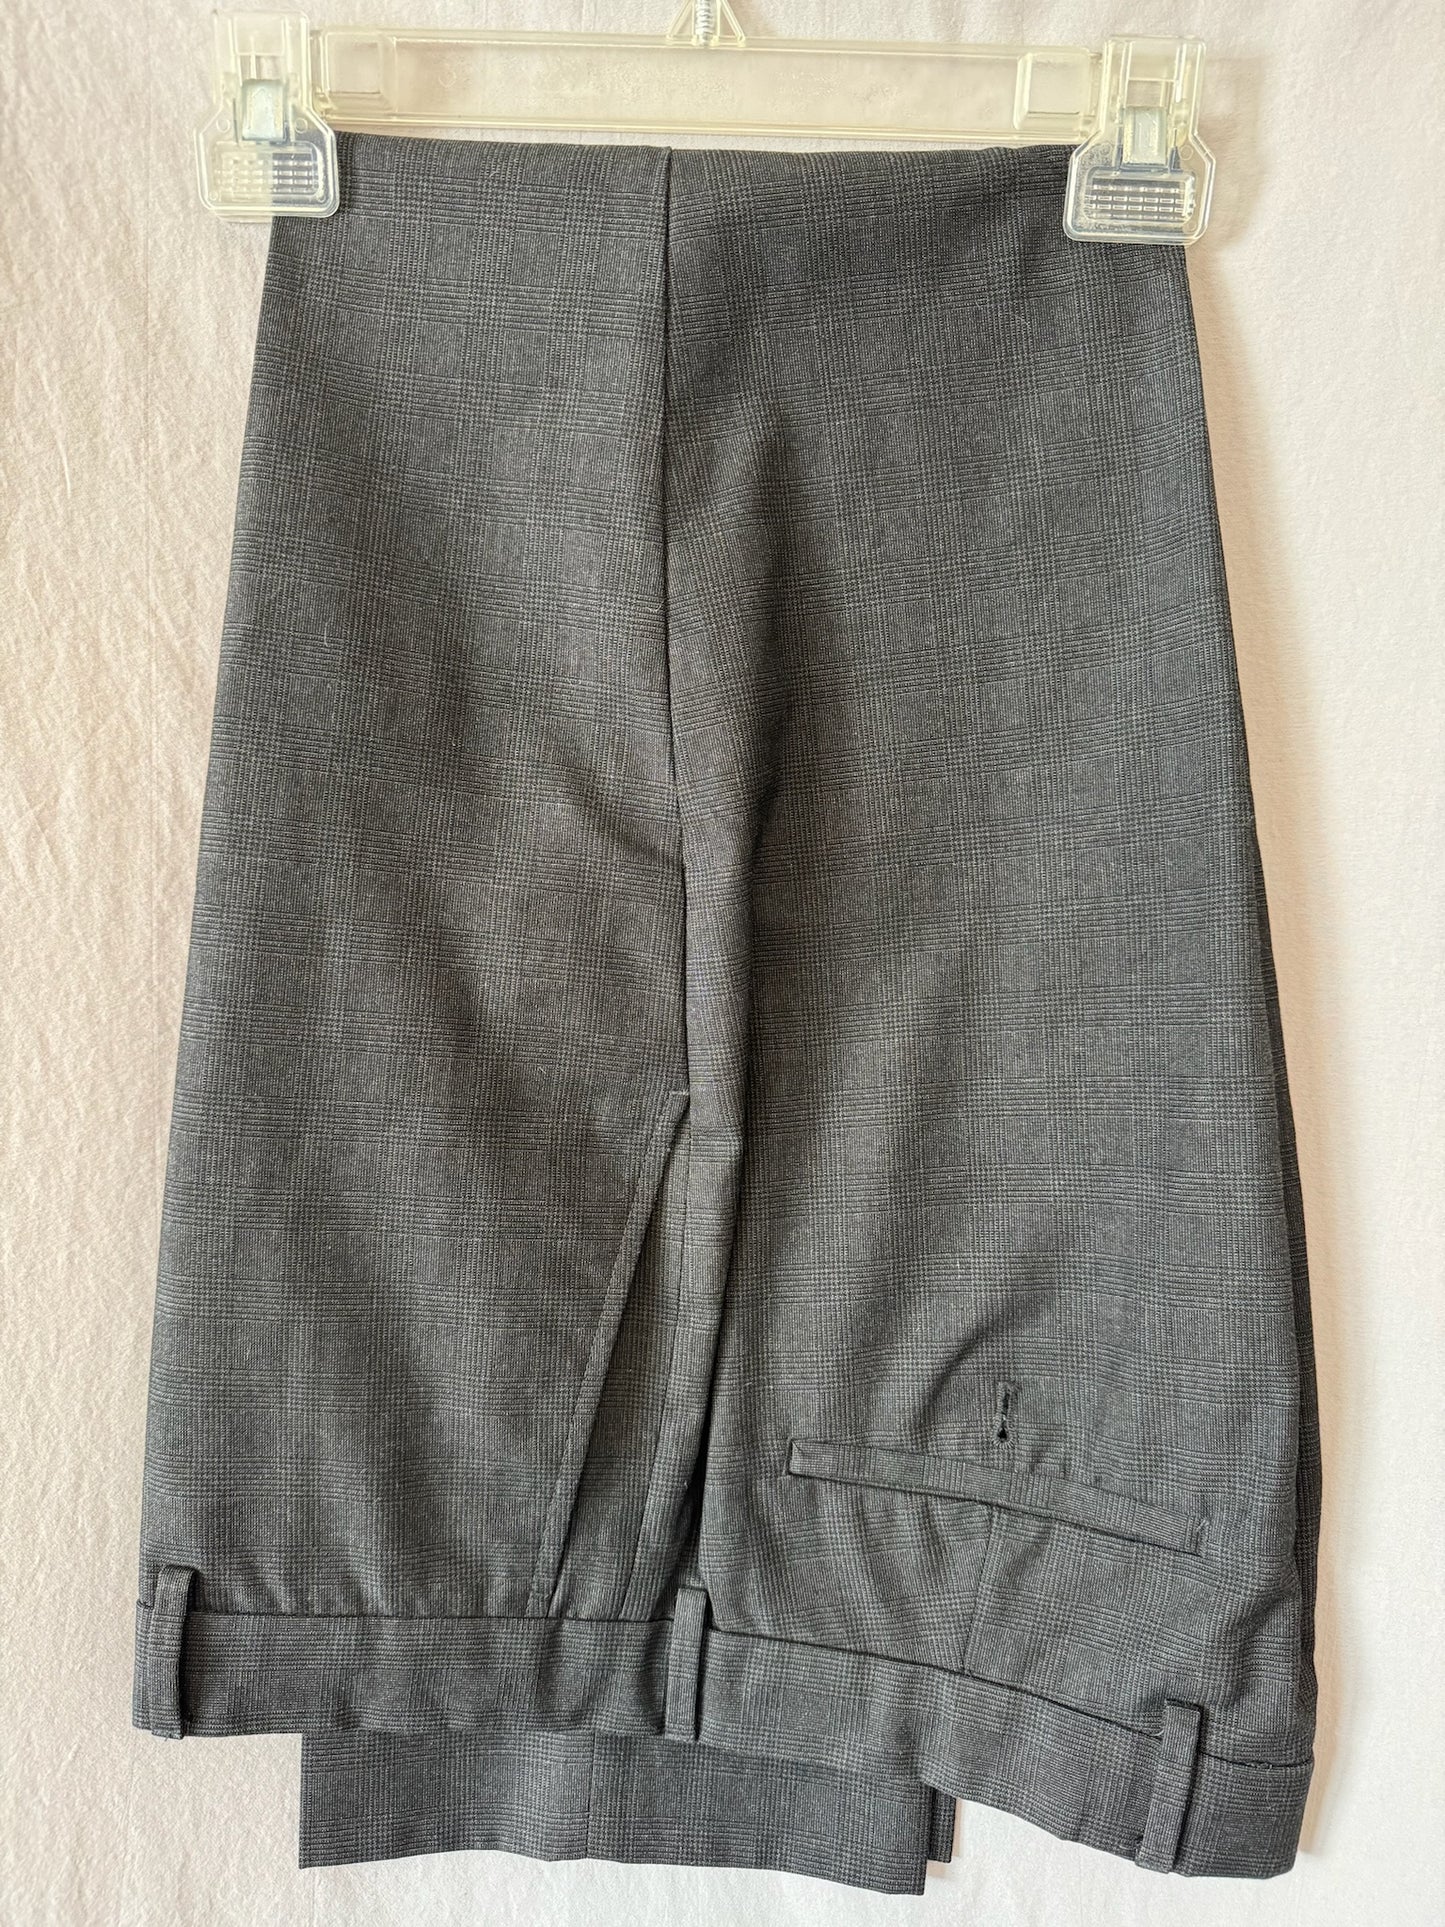 Men’s Gray Banana Republic Standard Fit Dress Pants Size 33 x 32 PPU Newport- 41071